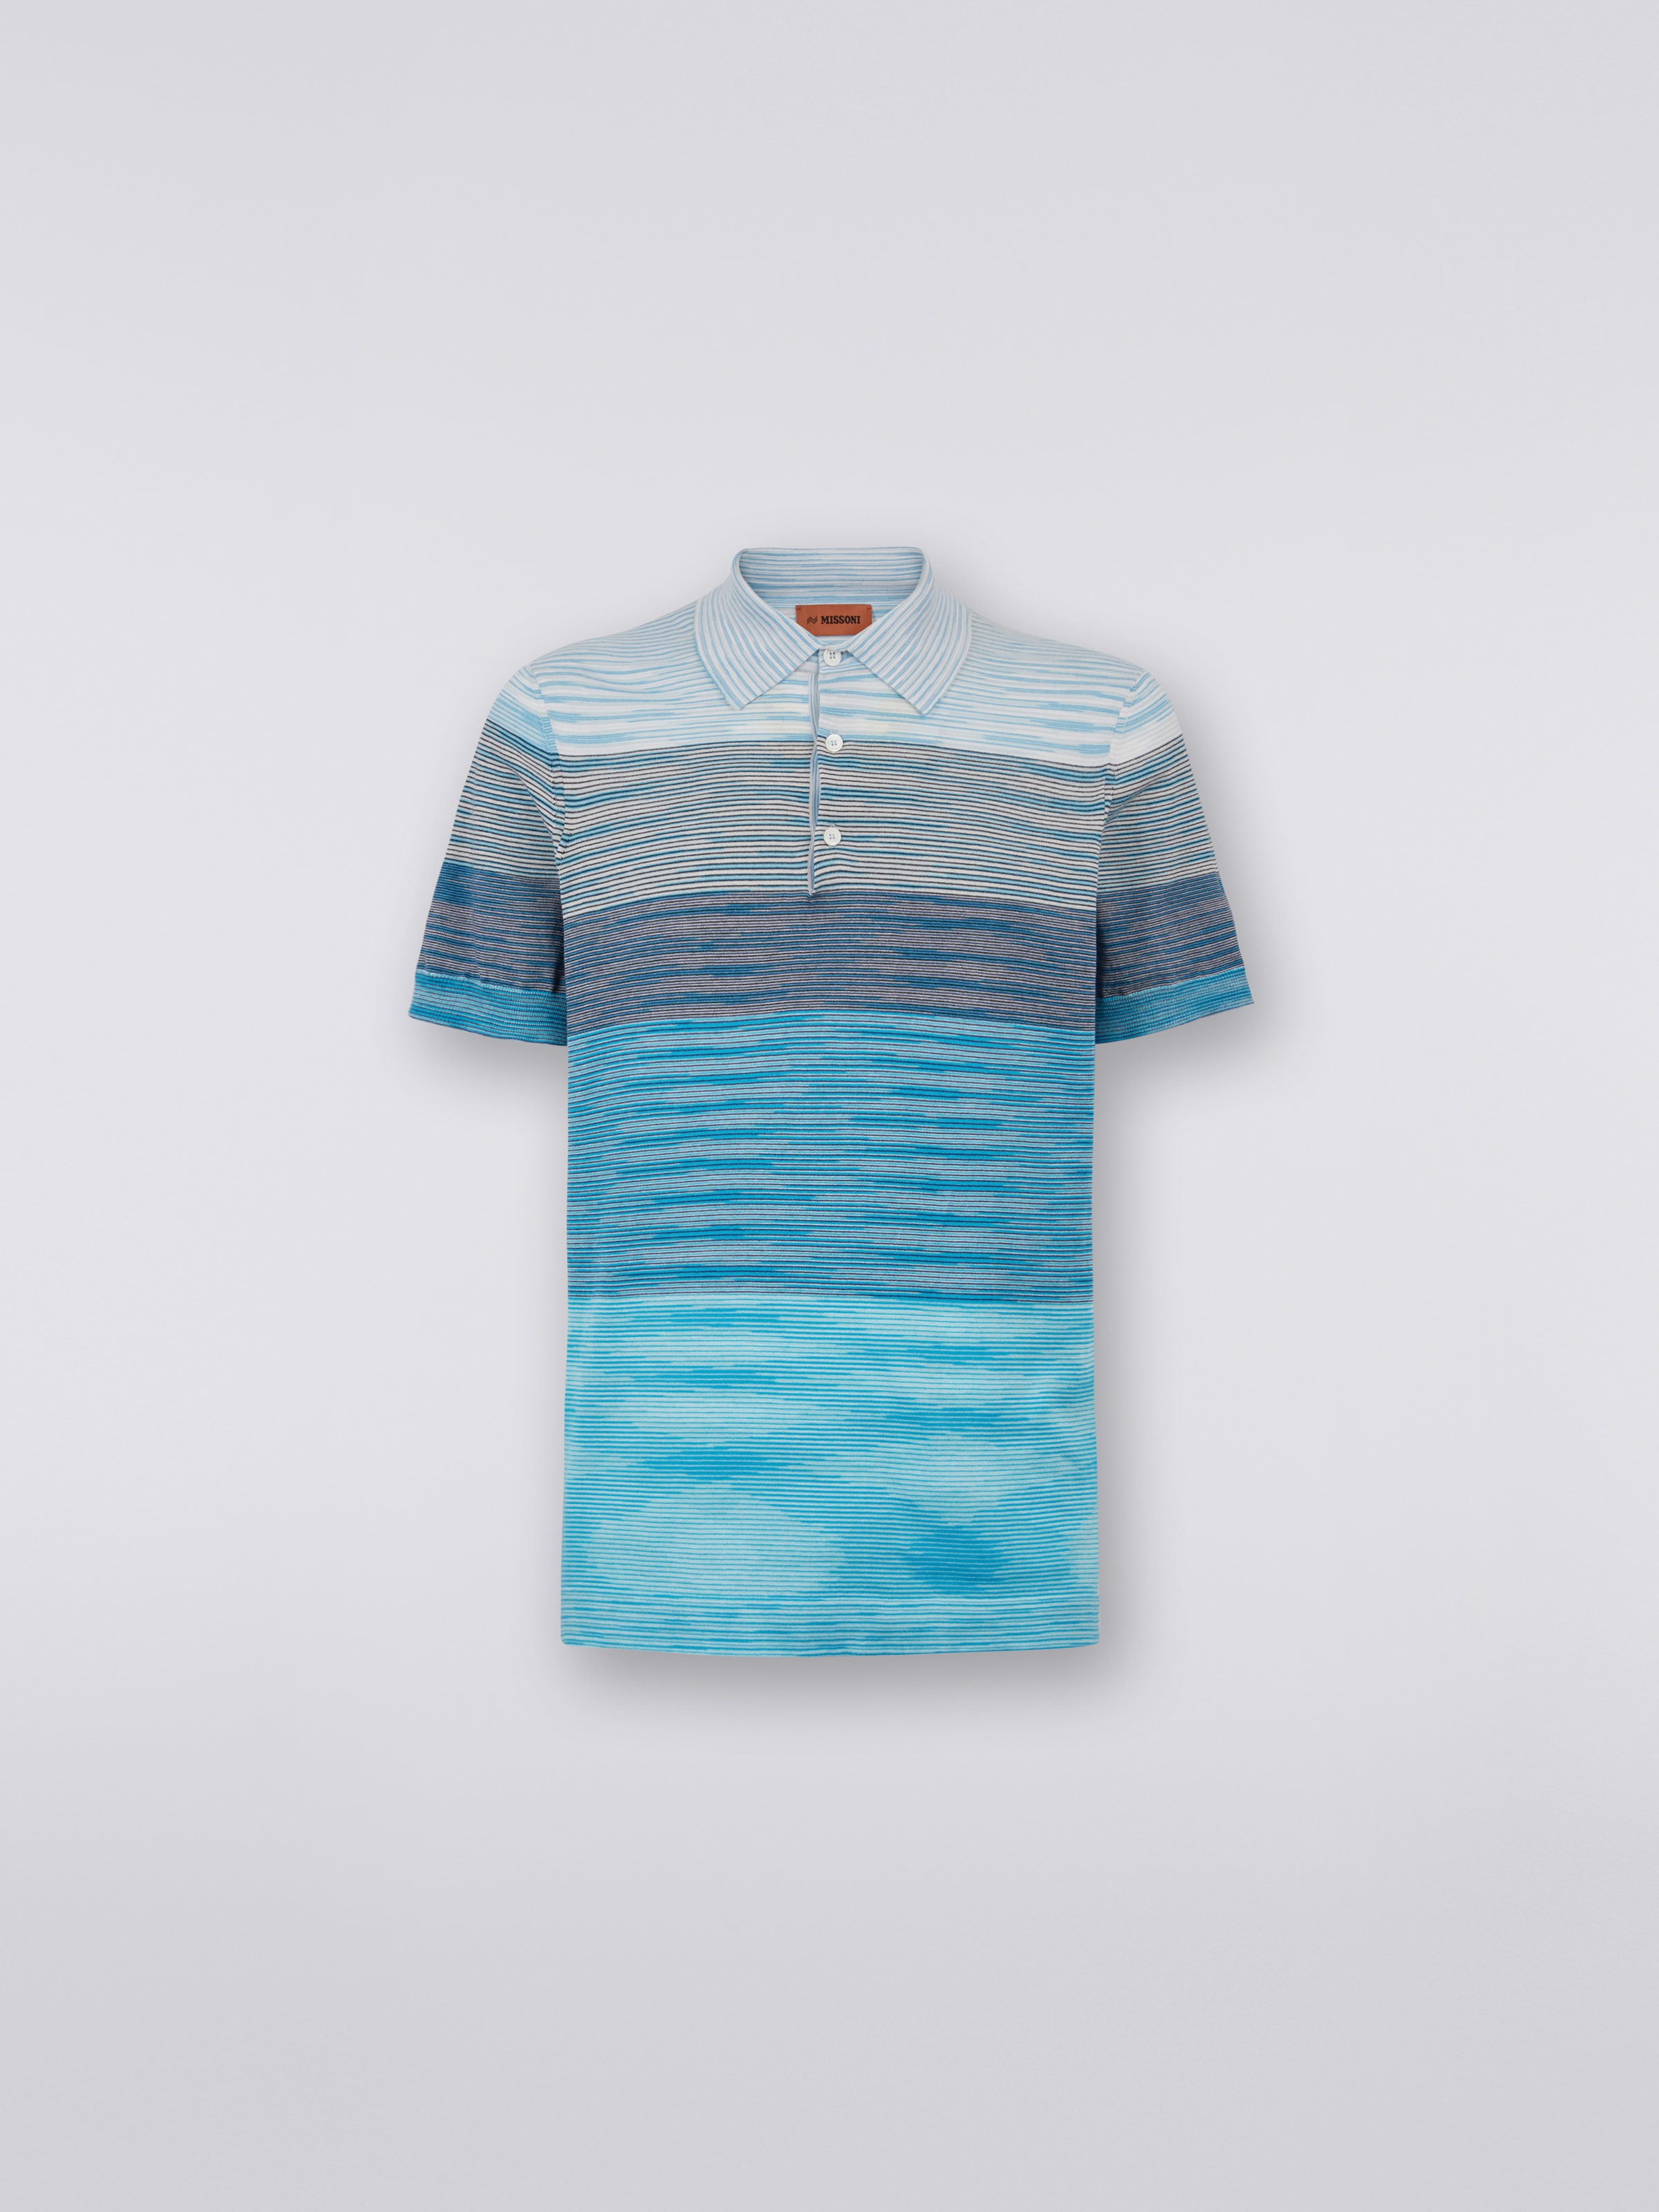 Kurzärmeliges Poloshirt aus gestreifter Baumwolle mit Dégradé-Effekt, Weiß & Hellblau - 0